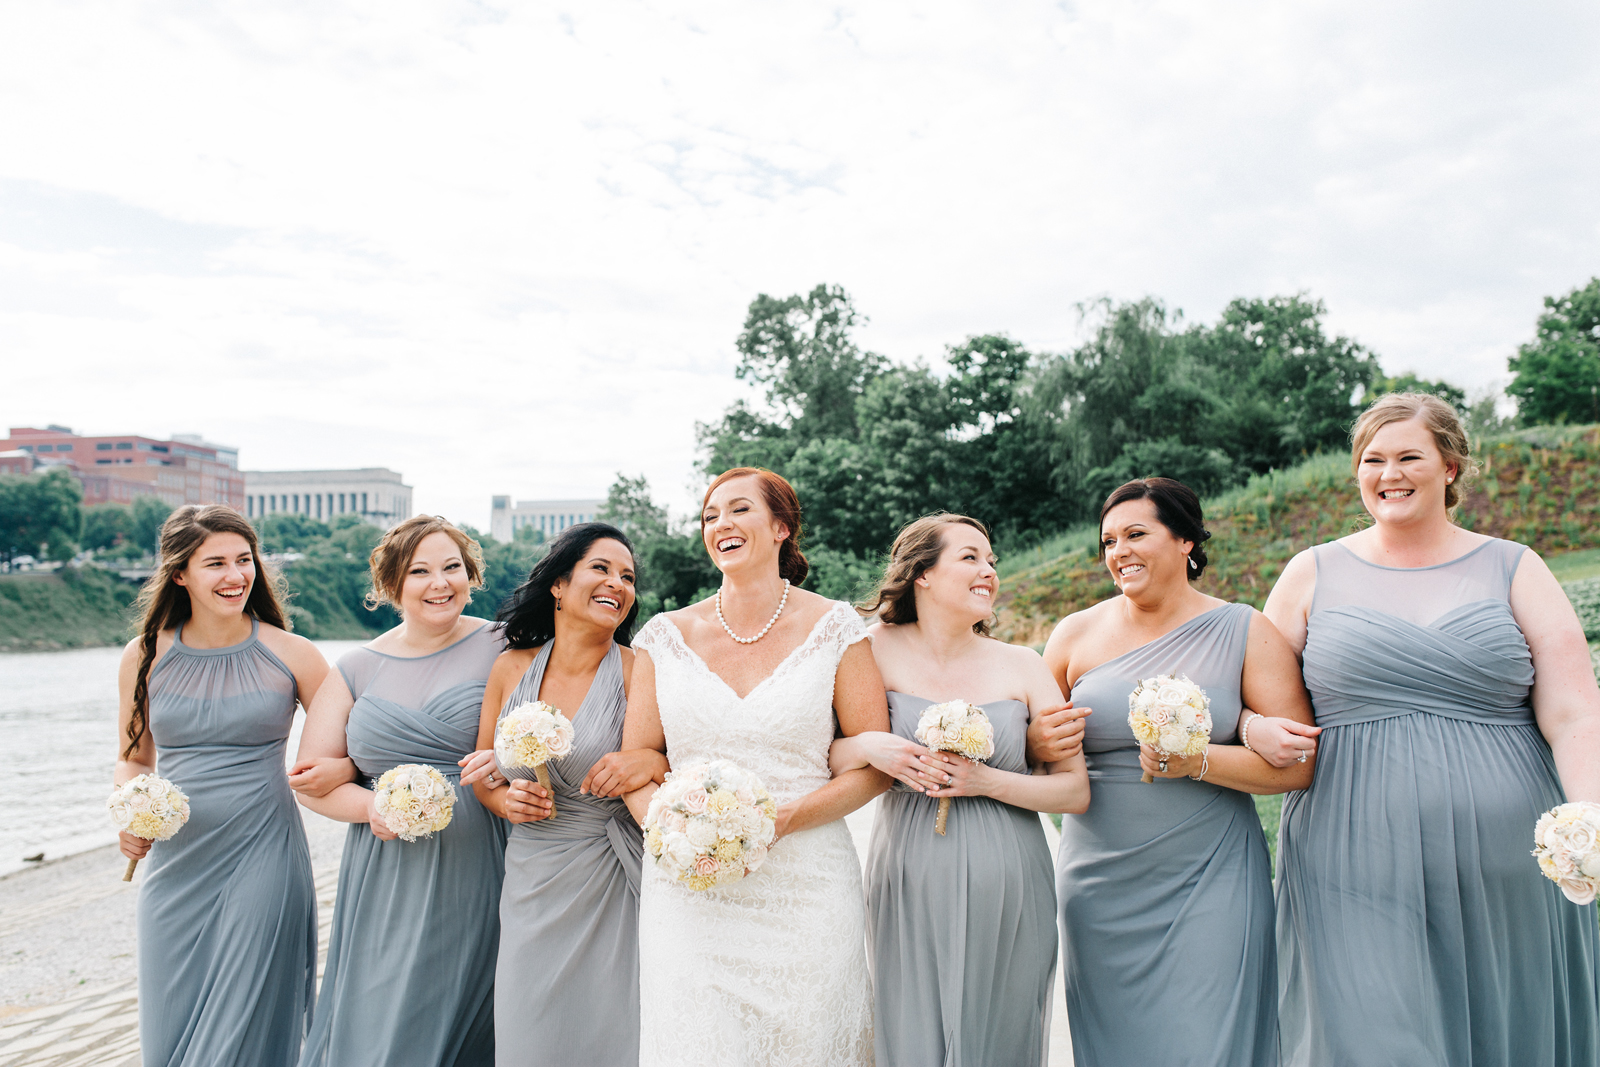 Bridge Building Wedding |Nashville Wedding Photographer Laura K. Allen